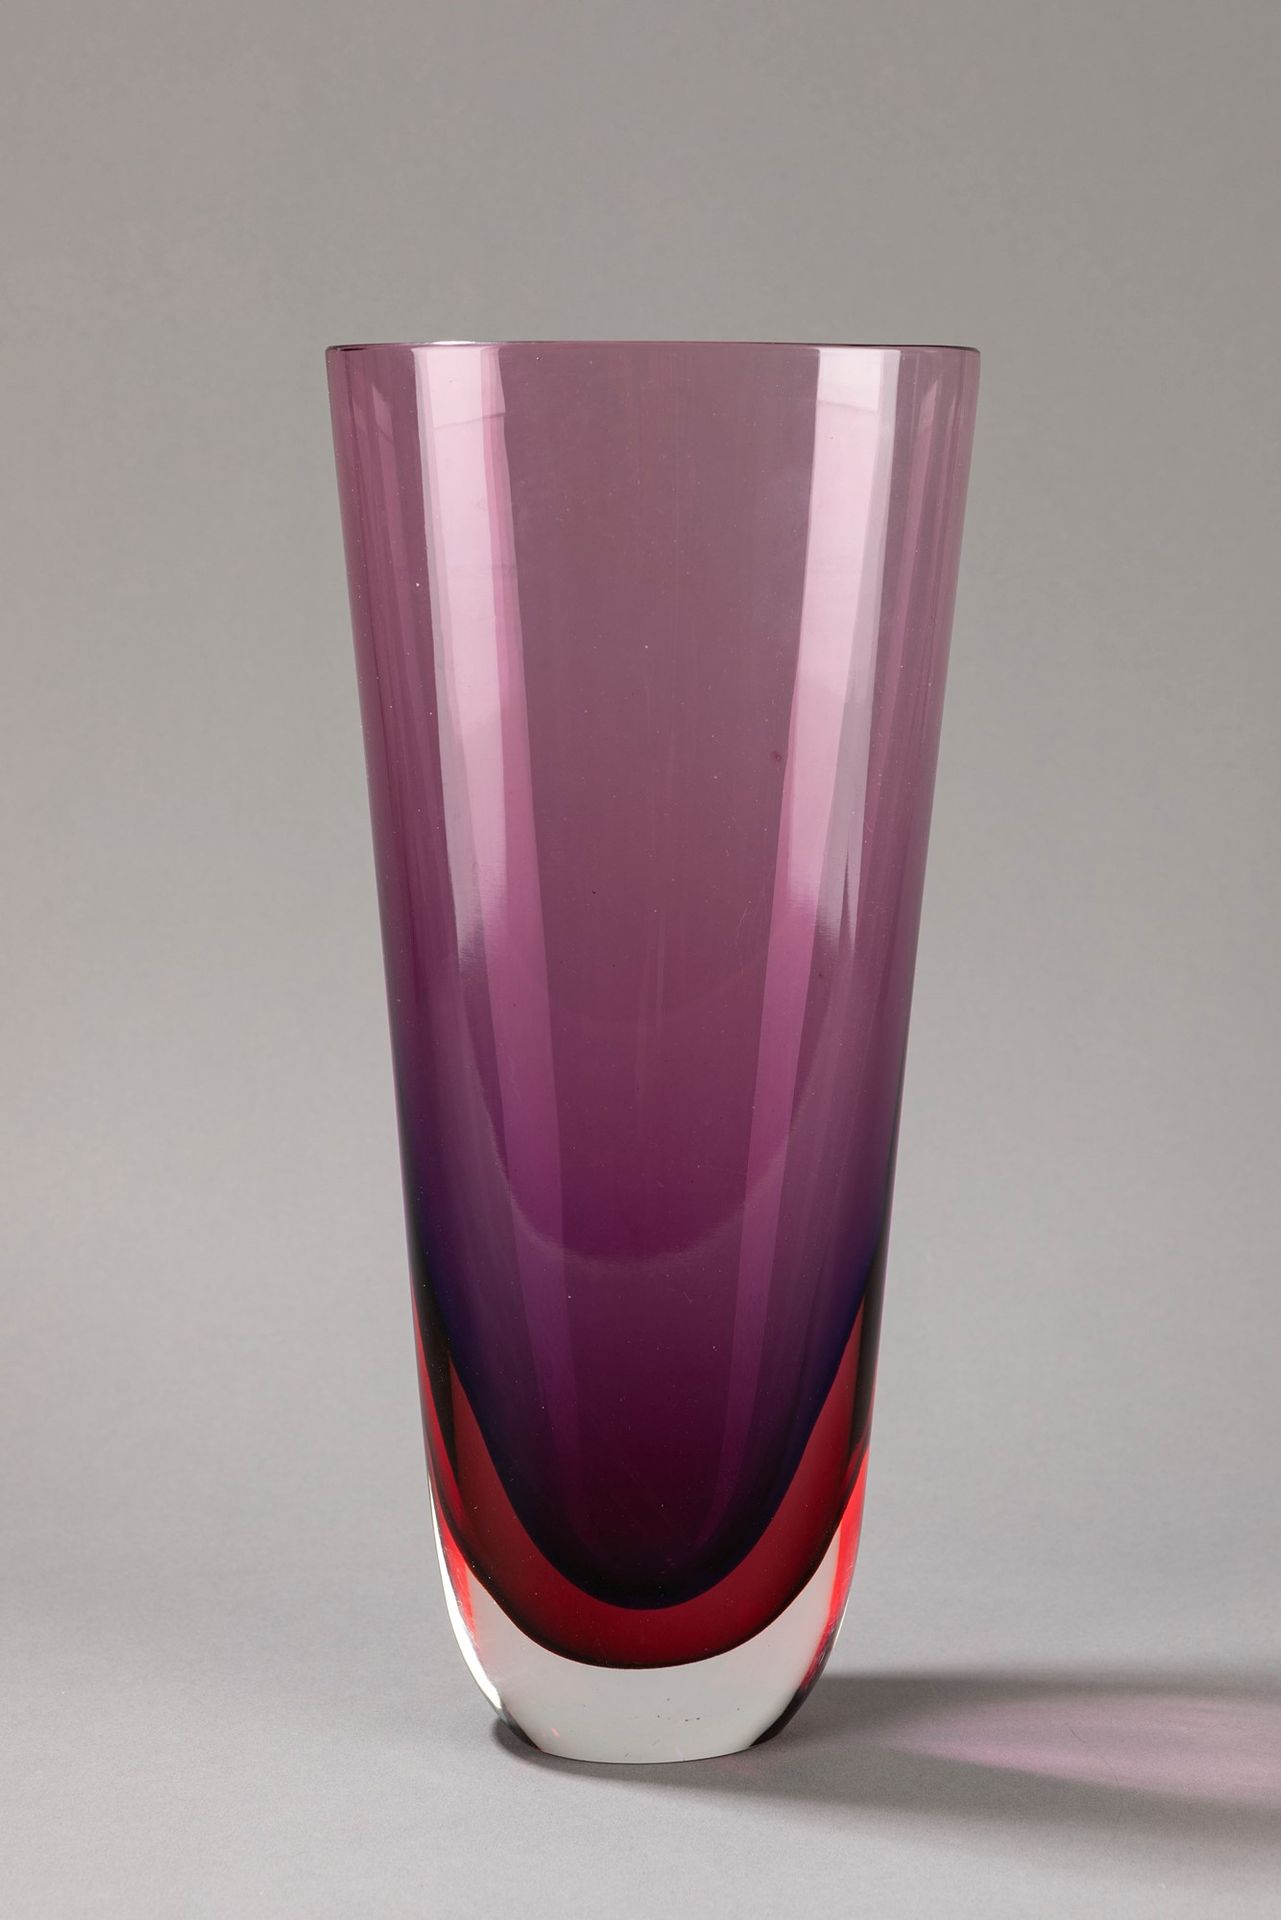 Flavio Poli Vase 9818, 1954

H 32 cm x 14,5 cm x 10 cm
sommerso blown glass real&hellip;